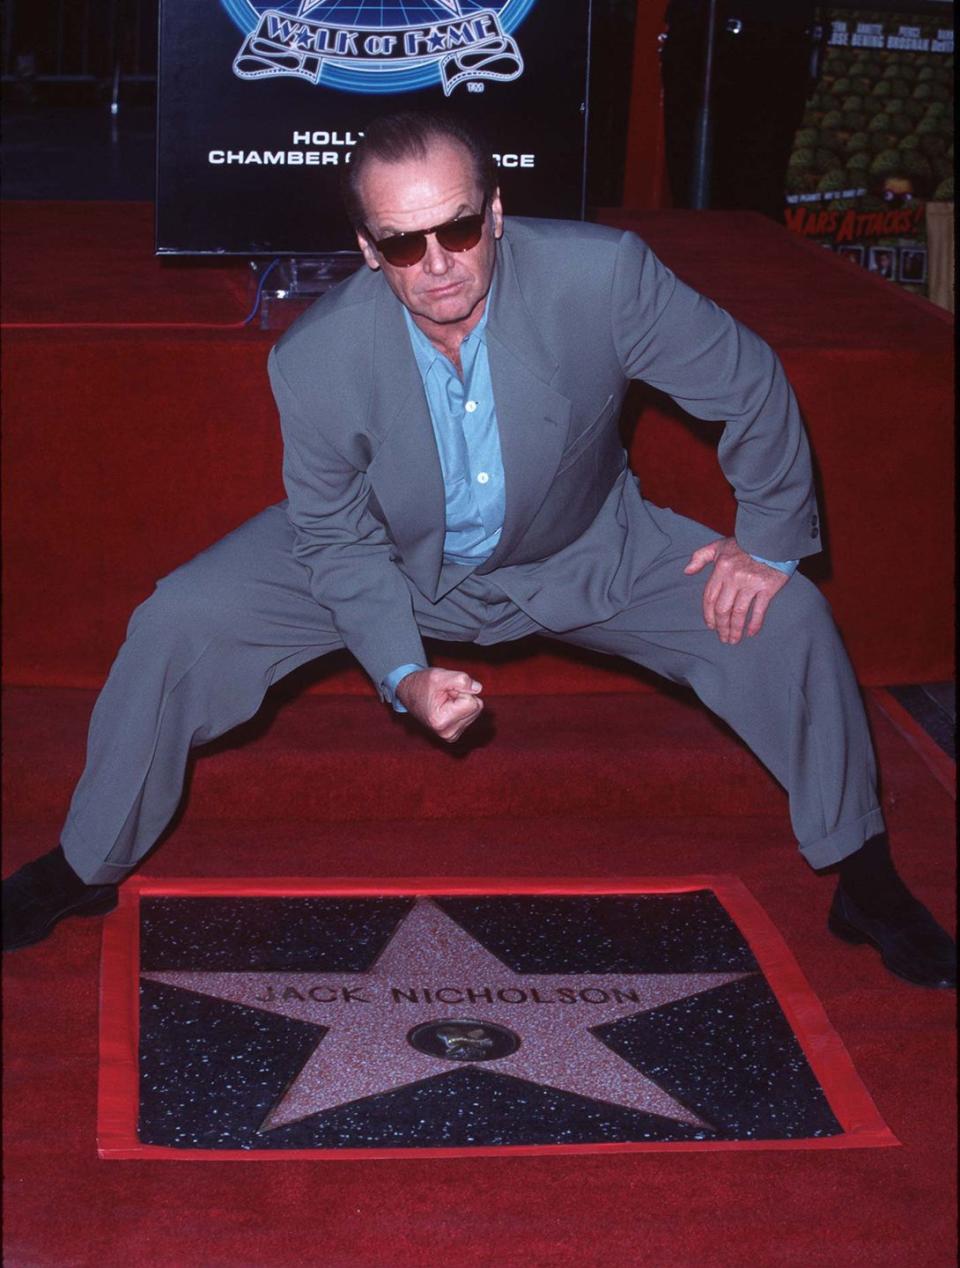 1996: Jack Nicholson embraces his star power